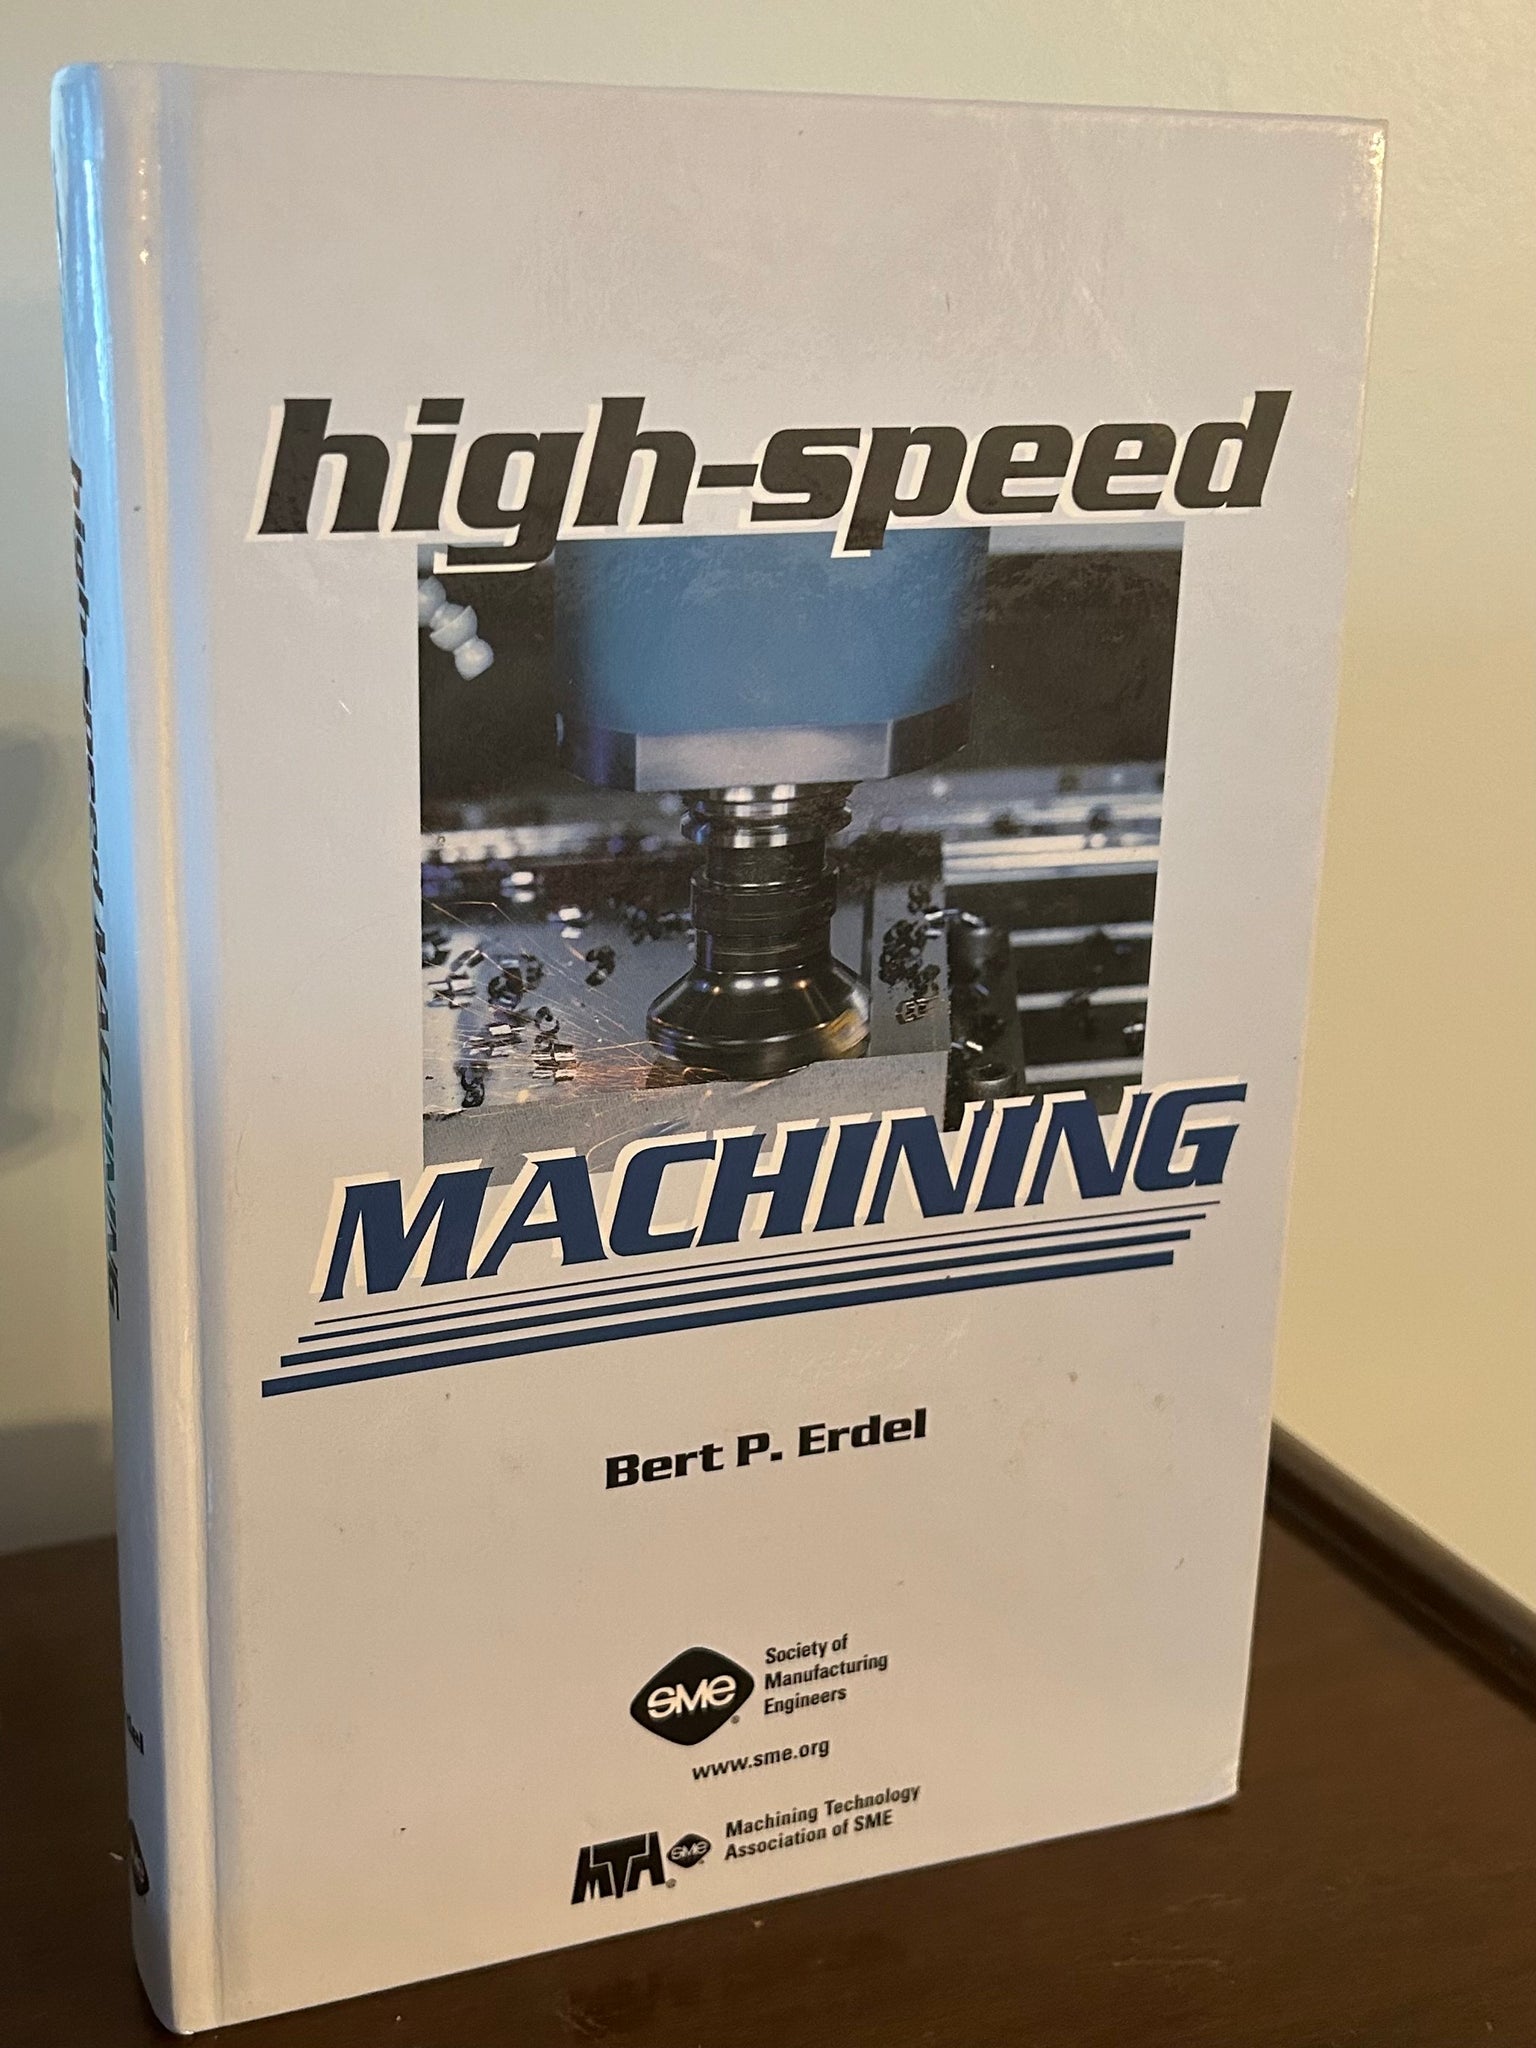 High-speed Machining